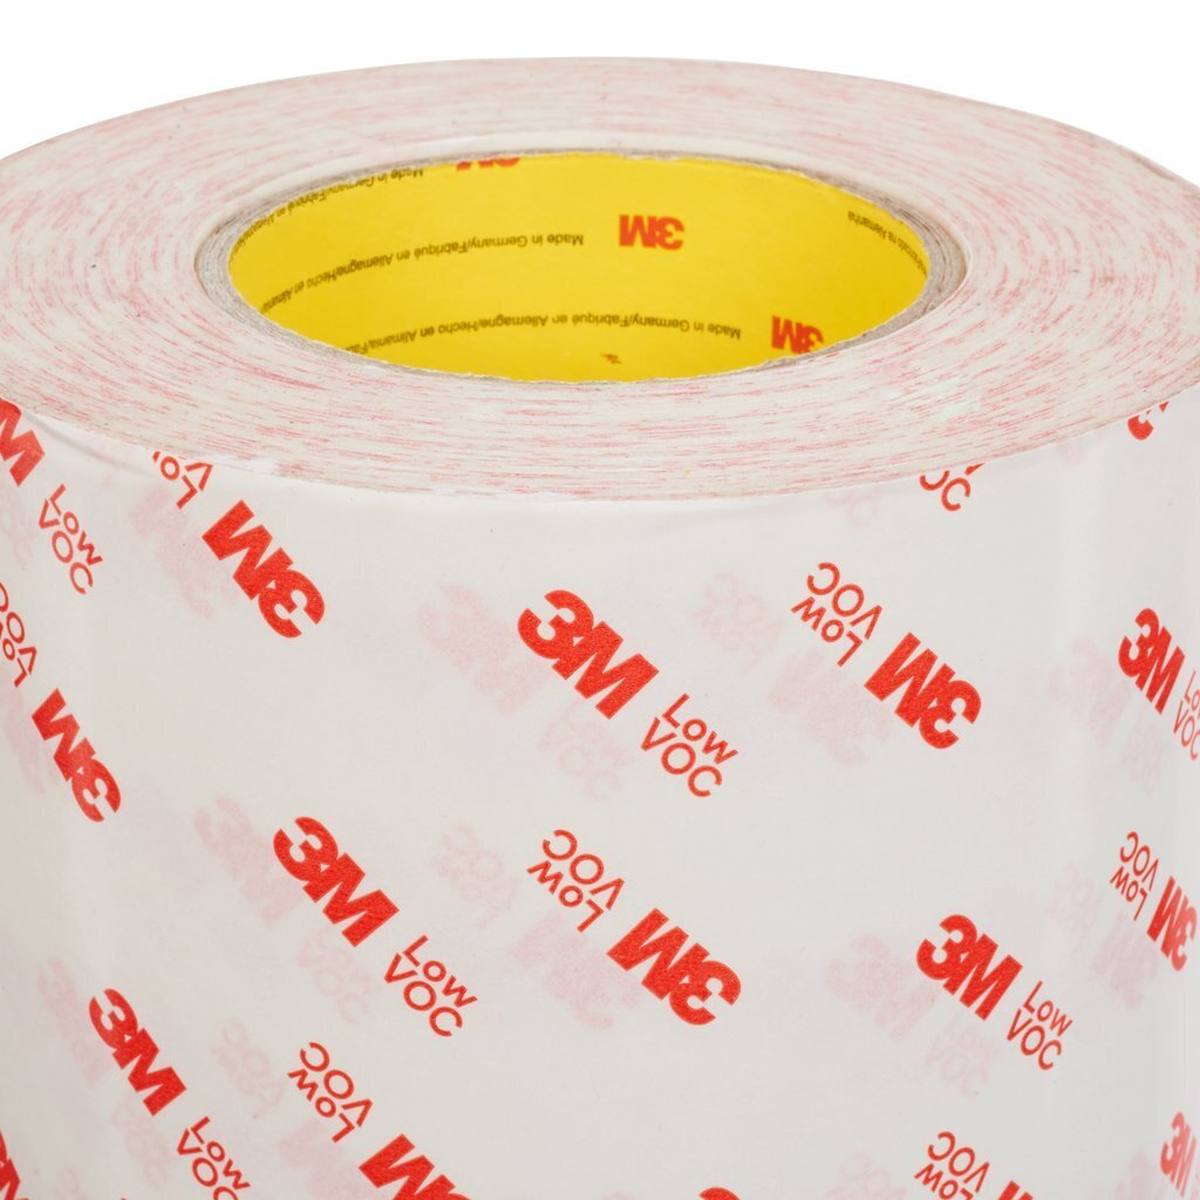 3M Dubbelzijdig plakband met vliespapier als rug 99015LVC, wit, 12 mm x 50 m, 0,15 mm